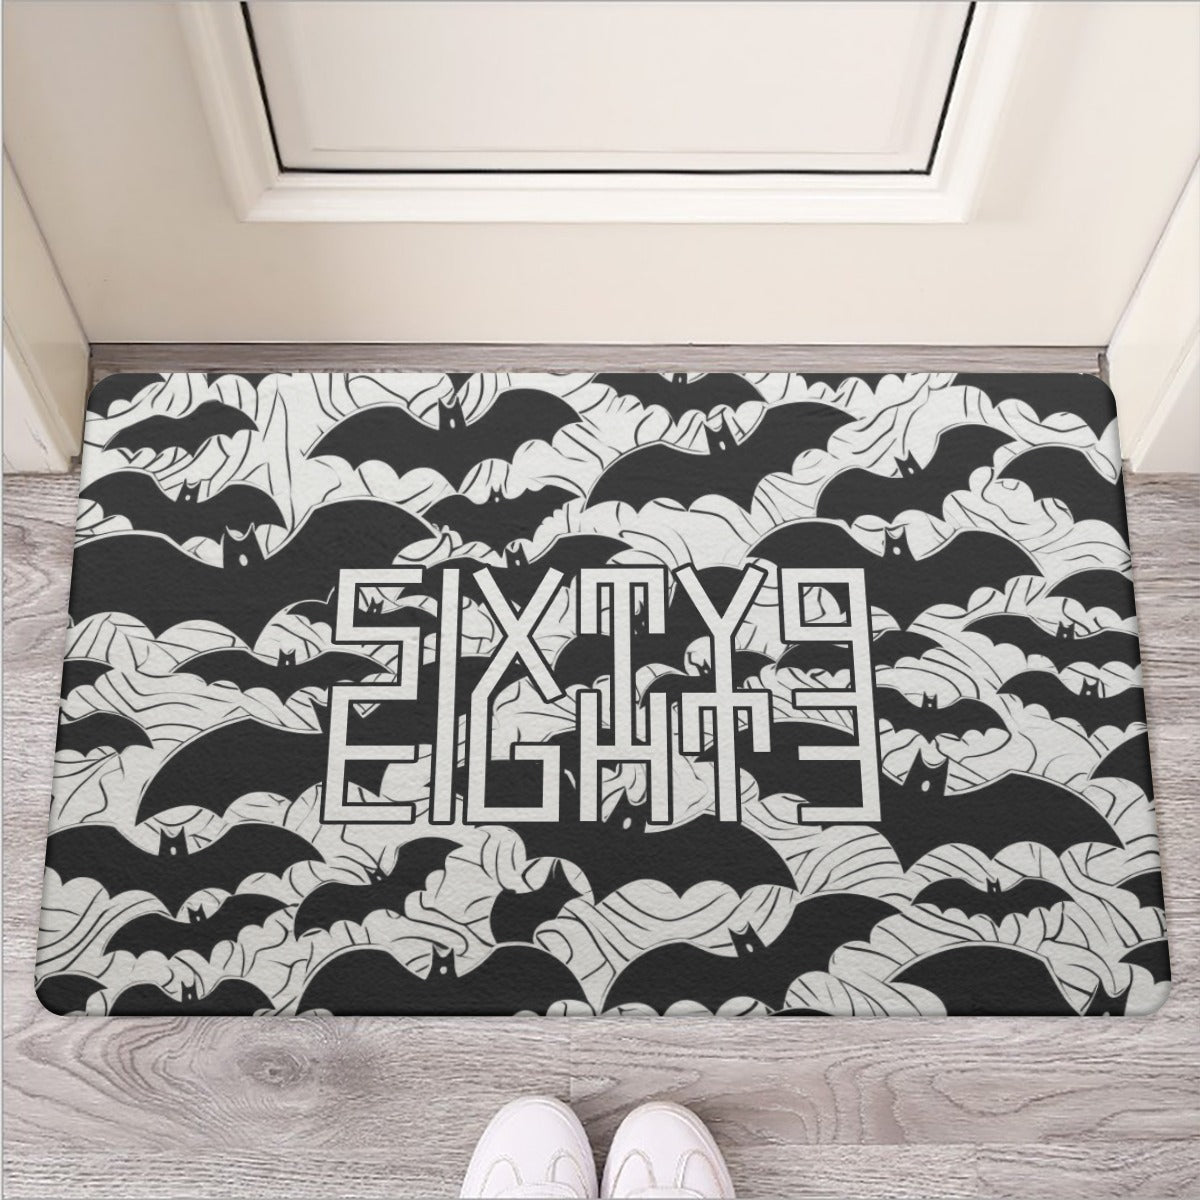 Sixty Eight 93 Logo White & Black Rubber Door Mat #10